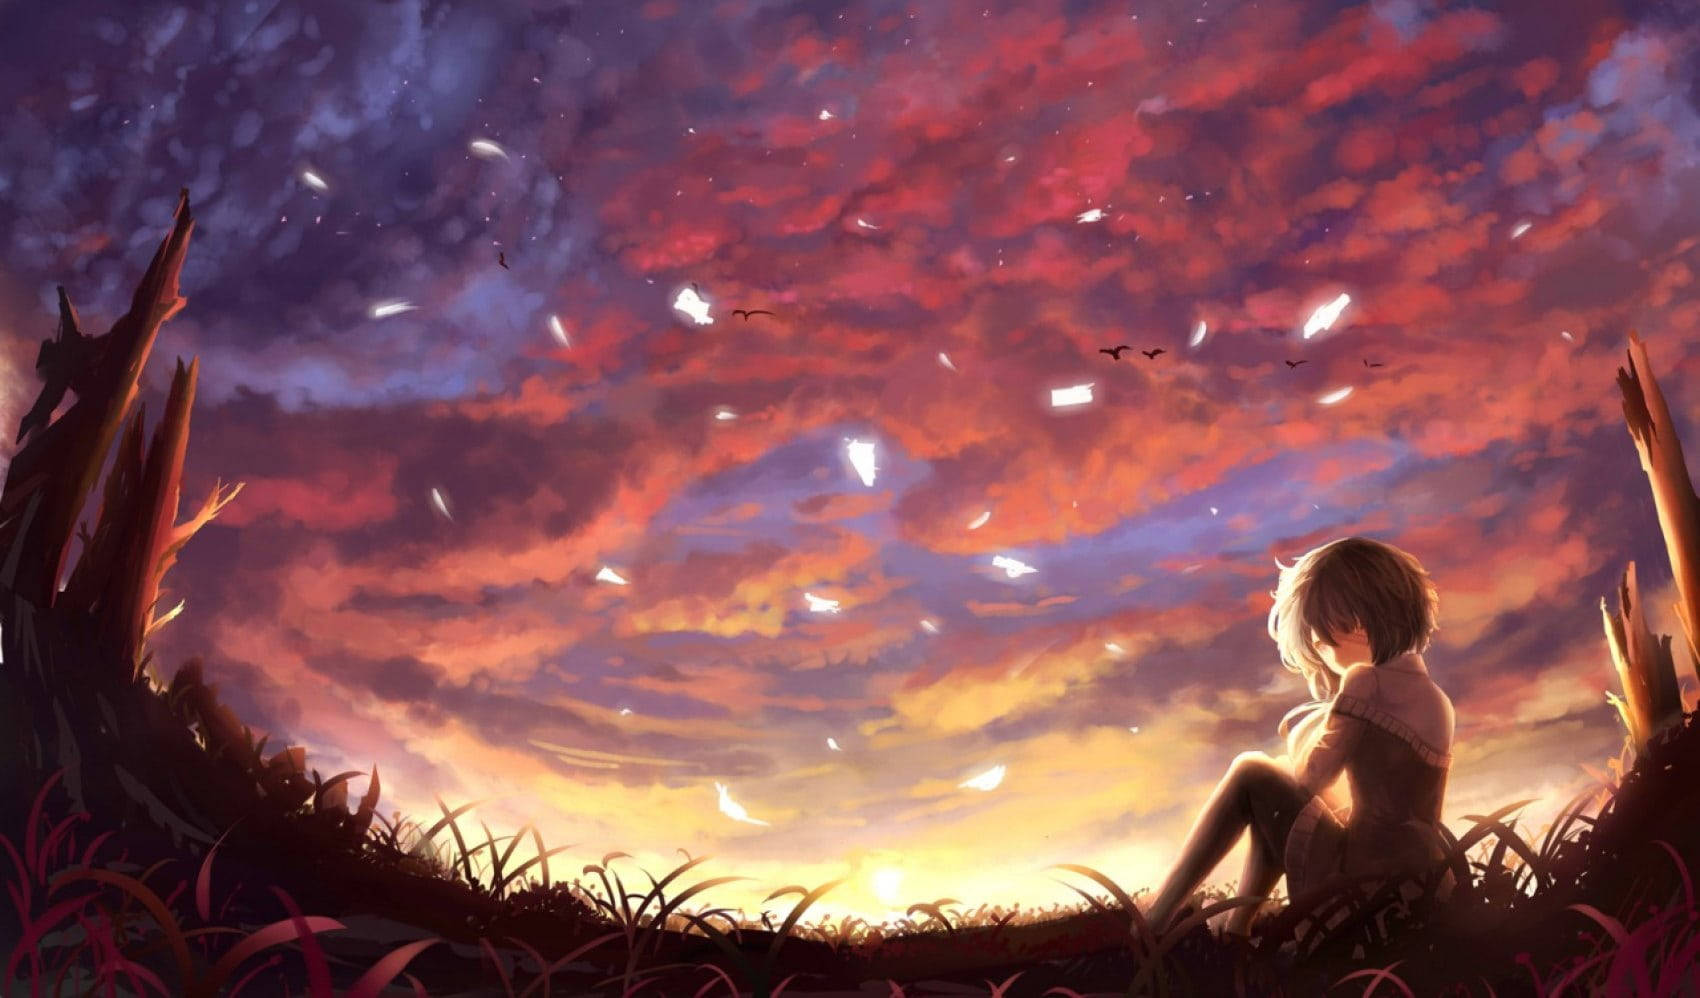 Anime Girl And Night Stars Wallpapers